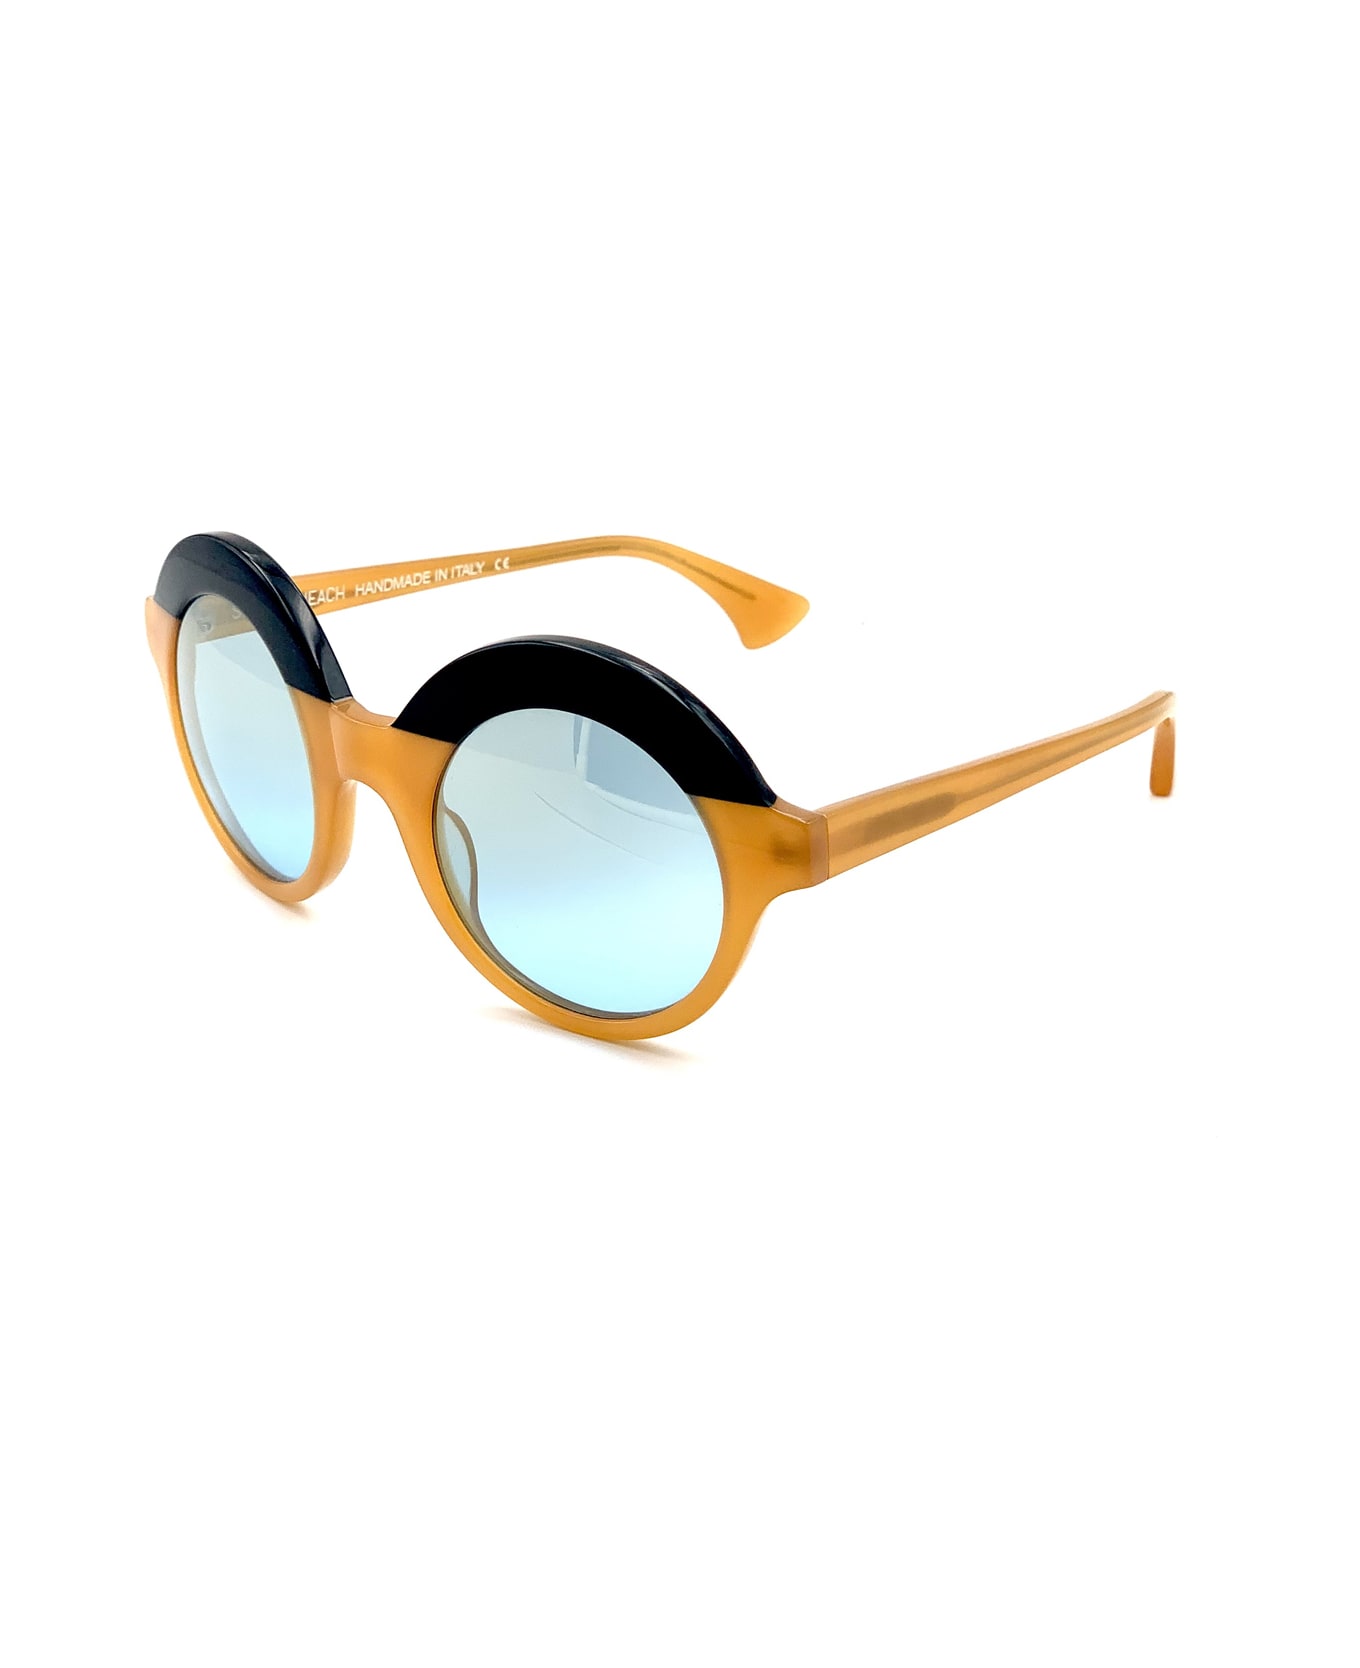 Silvian Heach Okinawa/s 04 Sunglasses - Arancione